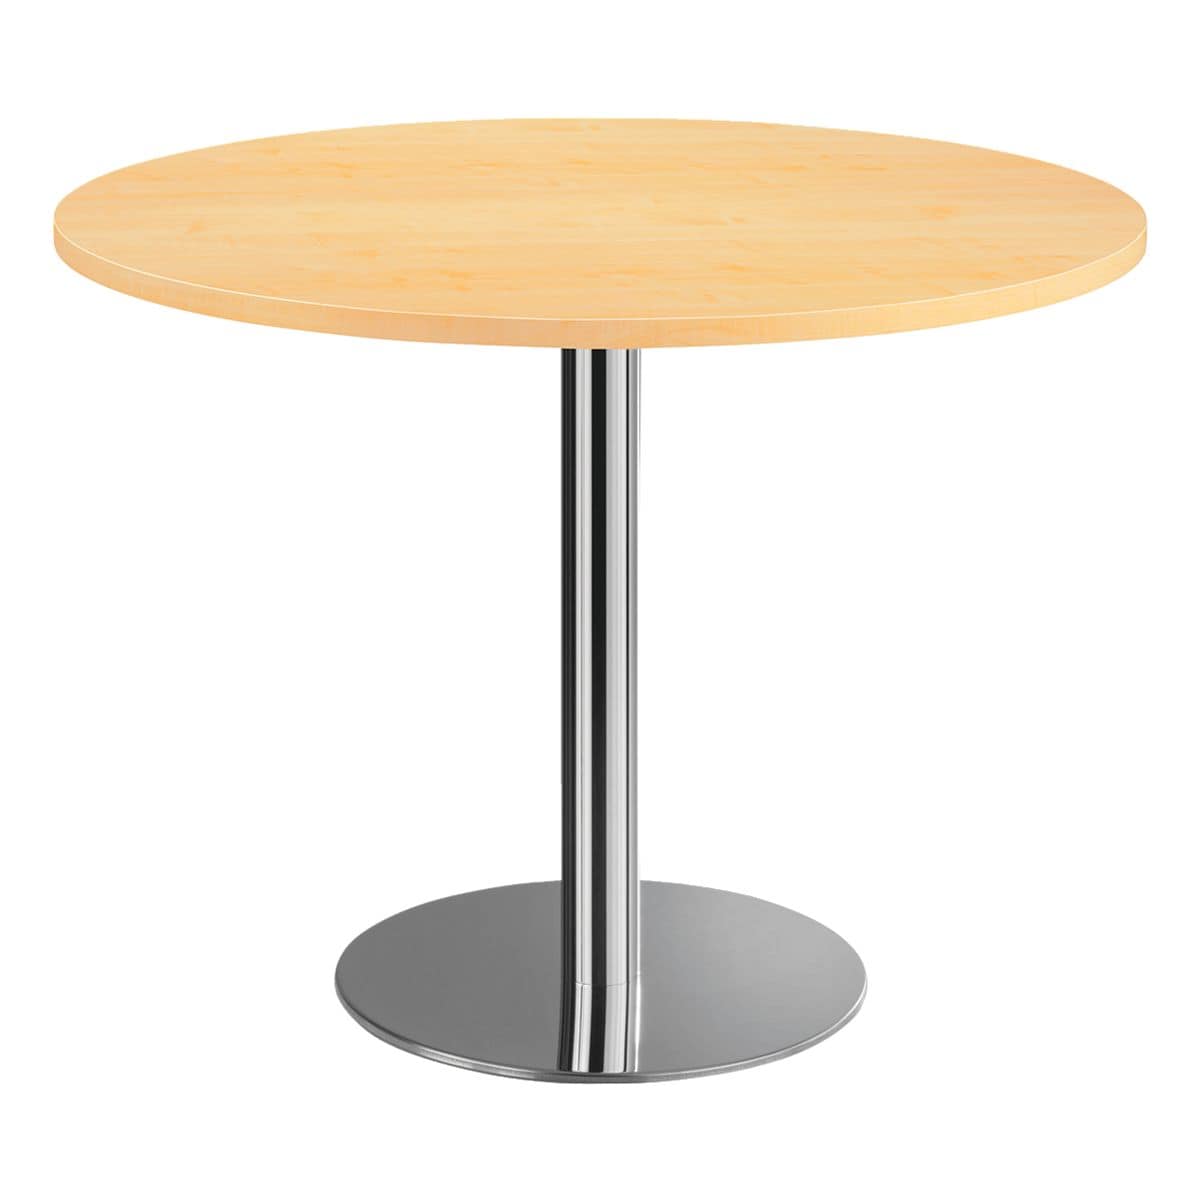 Стол 80 100 см. Стол column d80 White. Стол Tulip d80 белый. Aro стол Берлин круглый сталь стекло, 60 x 60 x 70см. Стол барный Signal b100 d60 см.